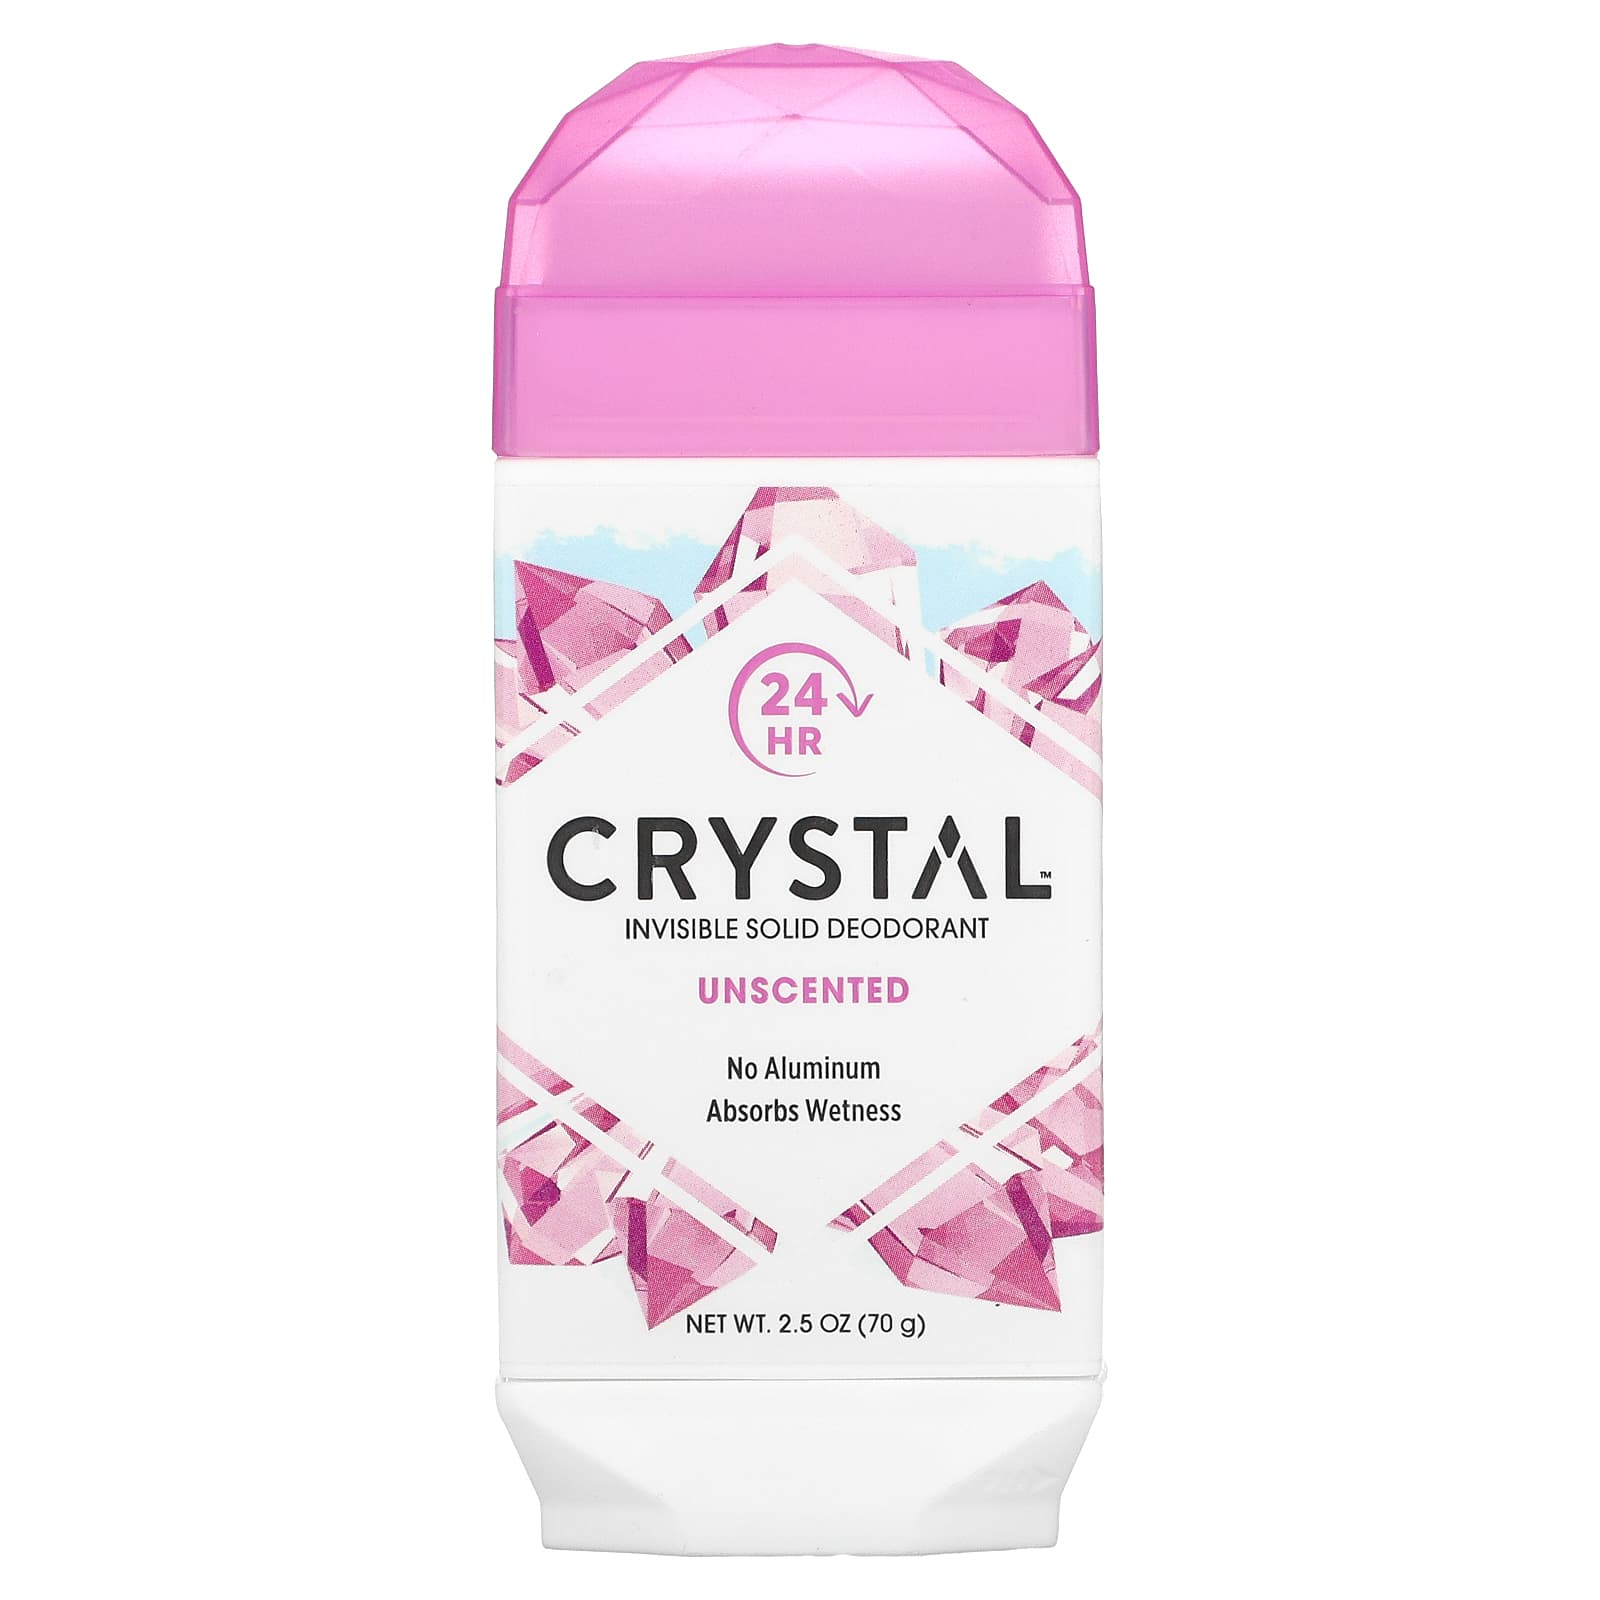 Дезодорант crystal. Дезодорант Crystal body Deodorant. Дезодорант Crystal Unscented. Дезодорант Crystal Invisible Solid Deodorant. Кристал дезодорант Кристалл.